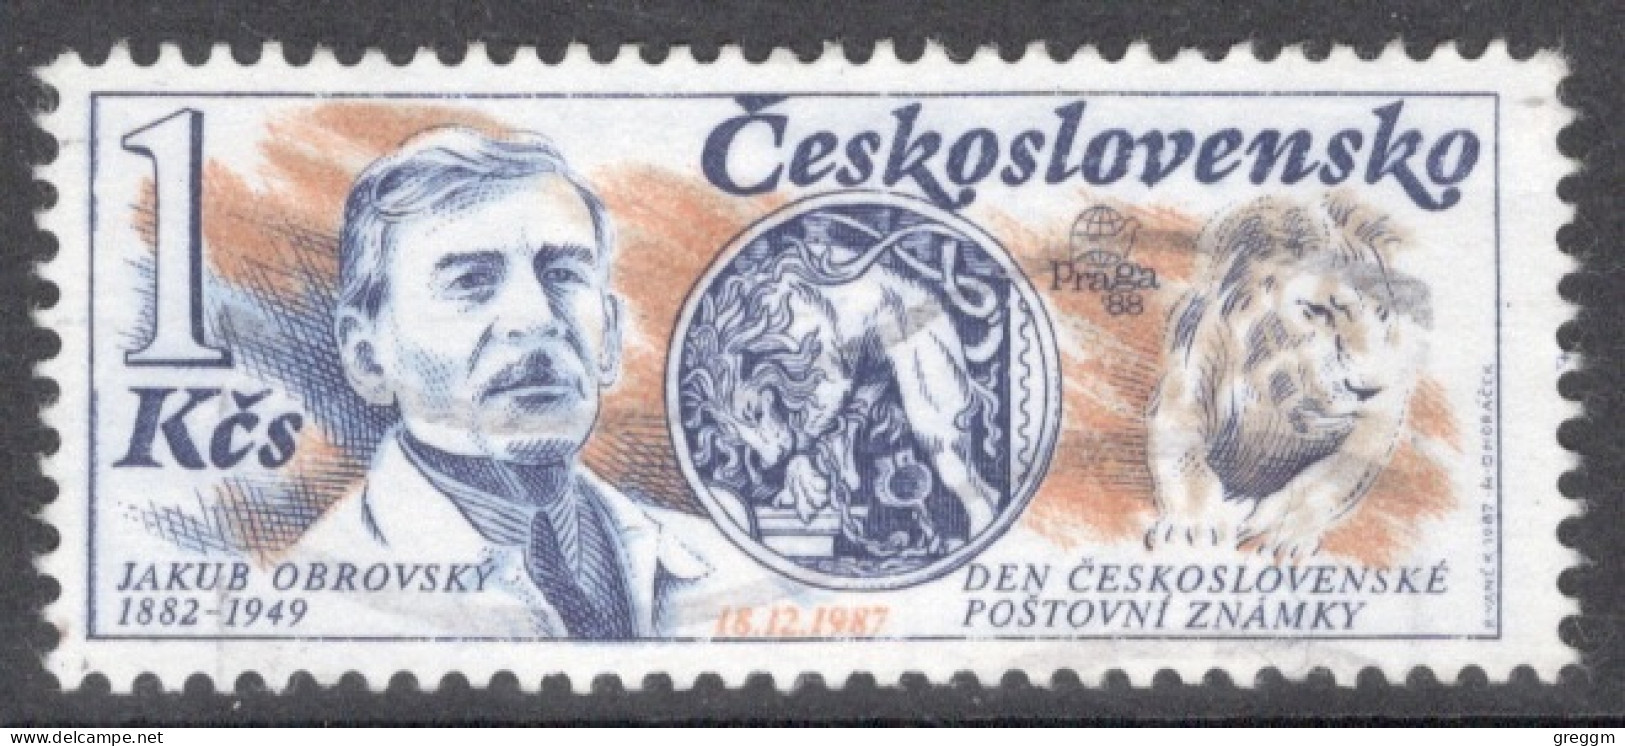 Czechoslovakia 1987 Single Stamp For The 105th Anniversary Of The Birth Of Jakub Obrovsky ,Stamp Designer In Fine Used - Gebruikt